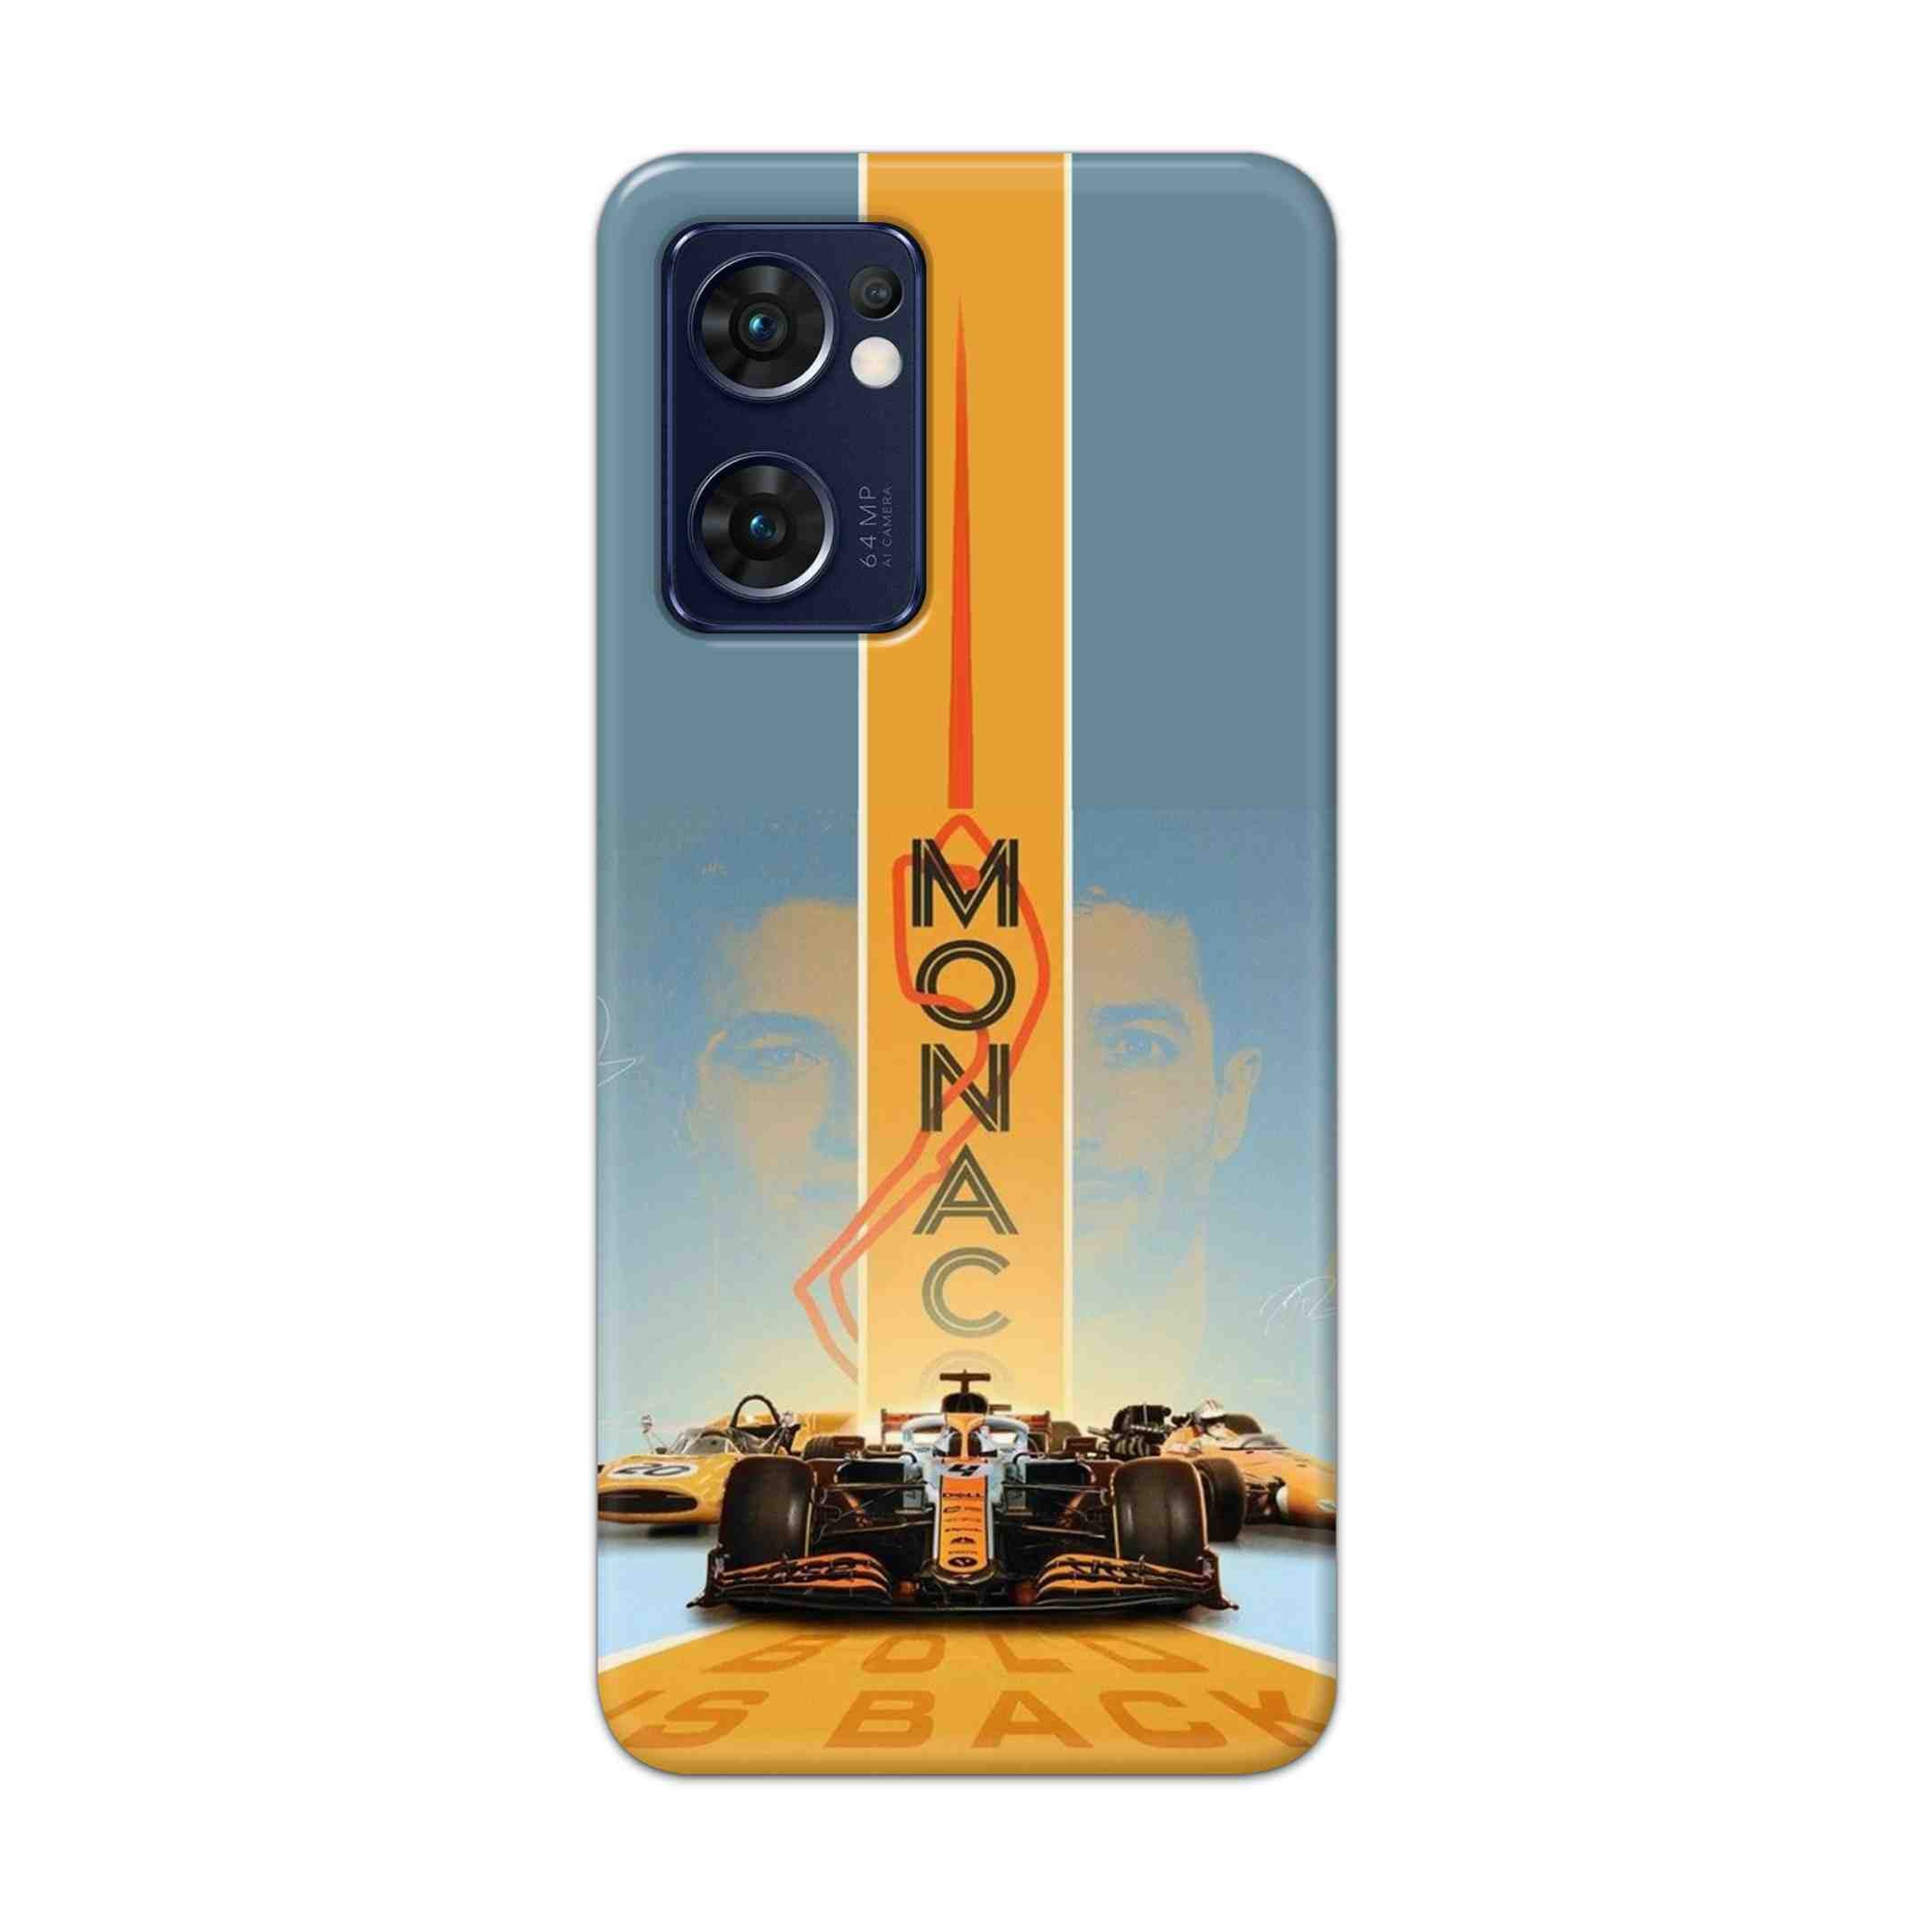 Buy Monac Formula Hard Back Mobile Phone Case Cover For Reno 7 5G Online